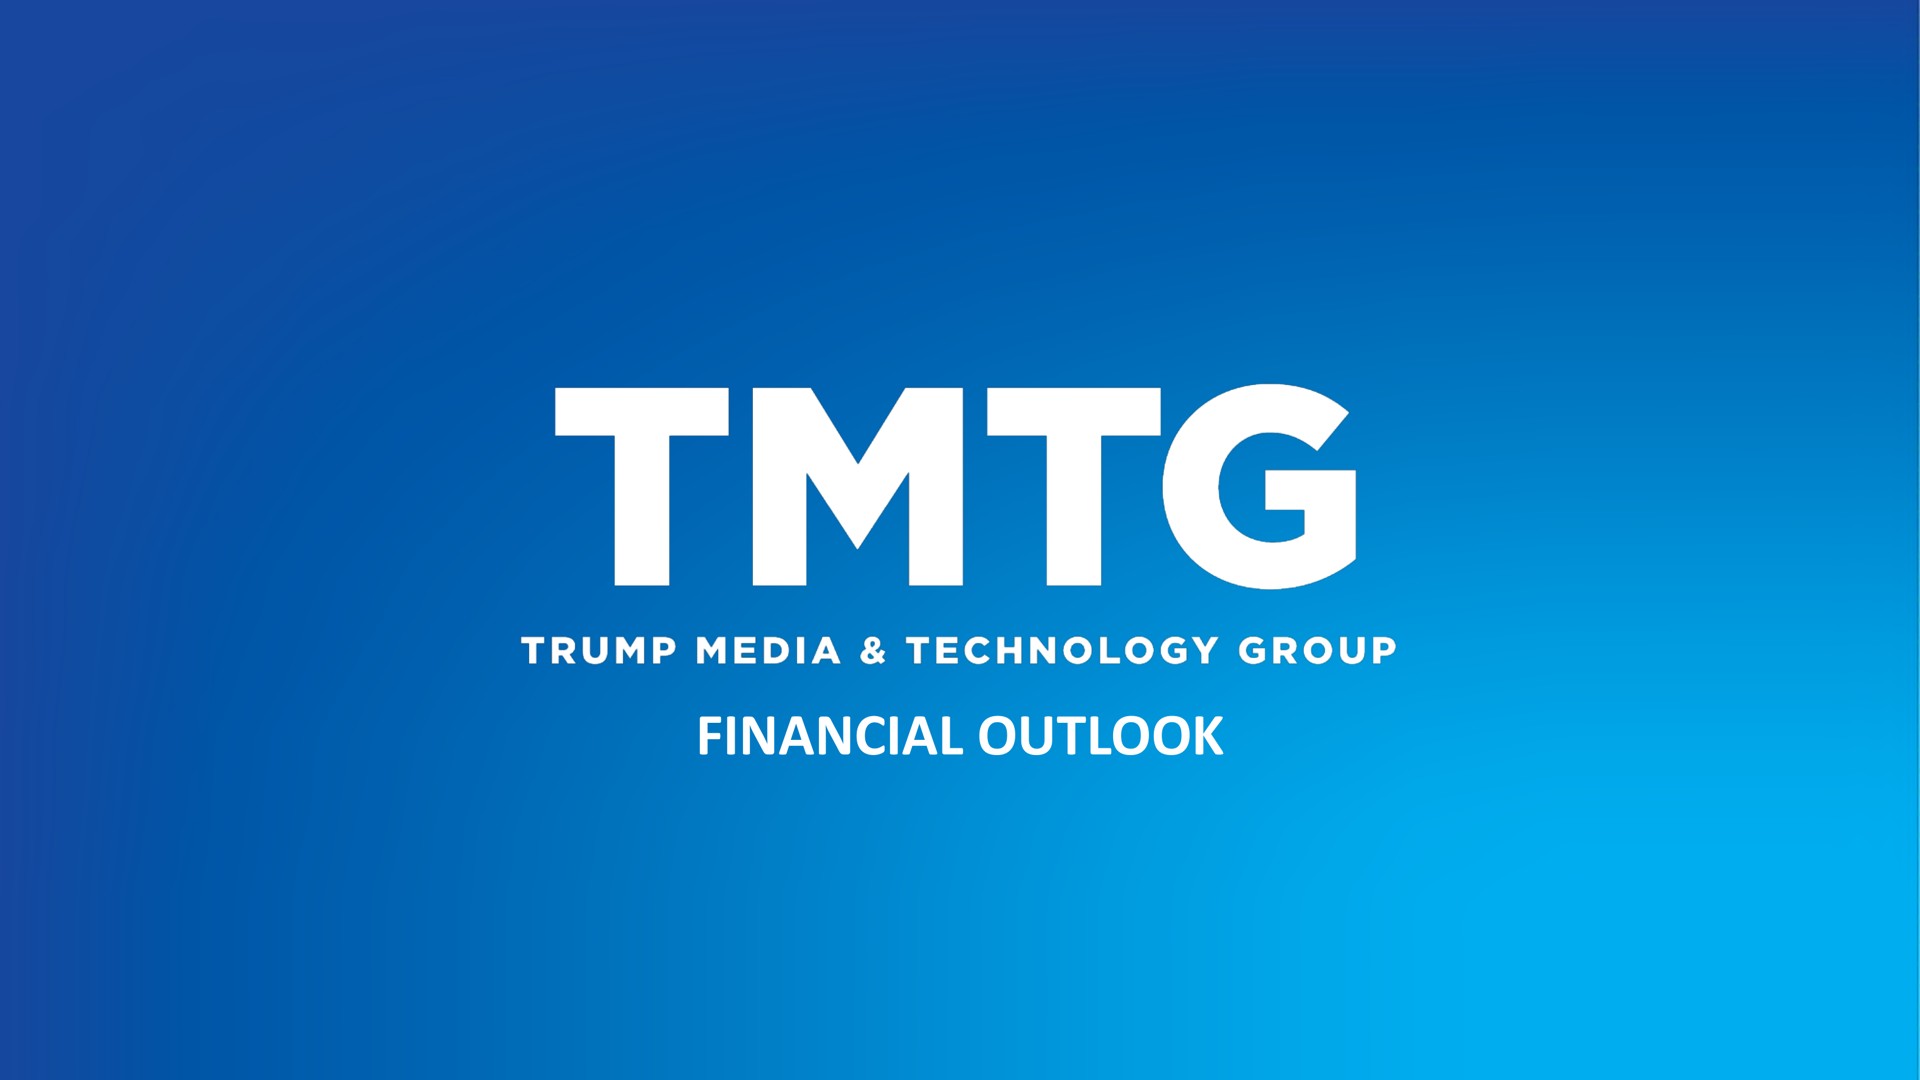 financial outlook trump media technology group | TMTG